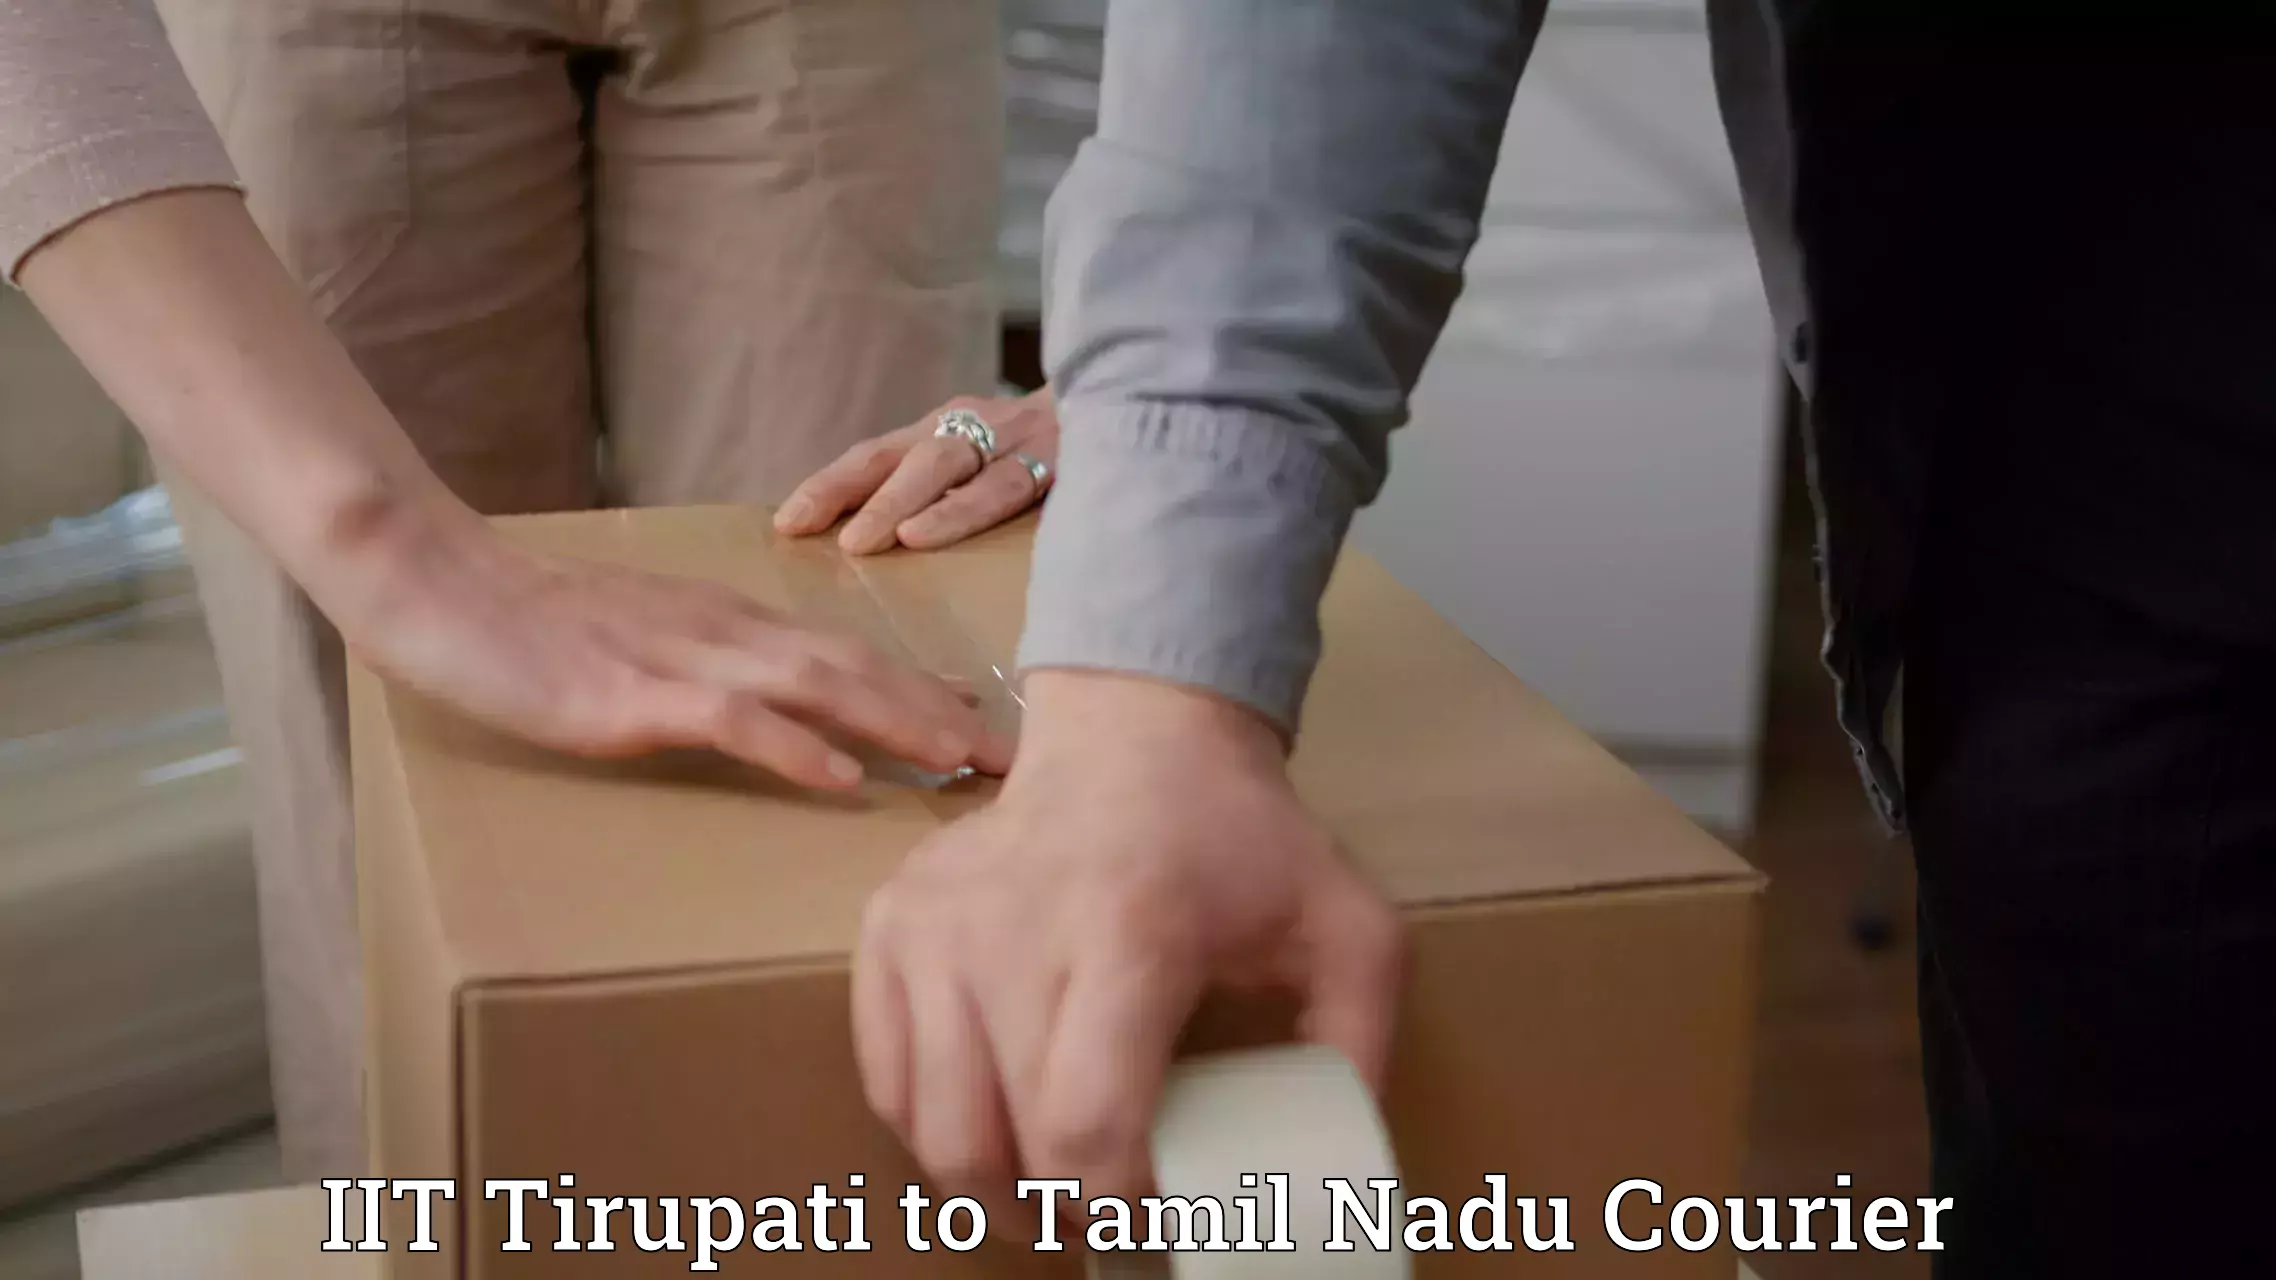 Courier service comparison IIT Tirupati to Tamil Nadu